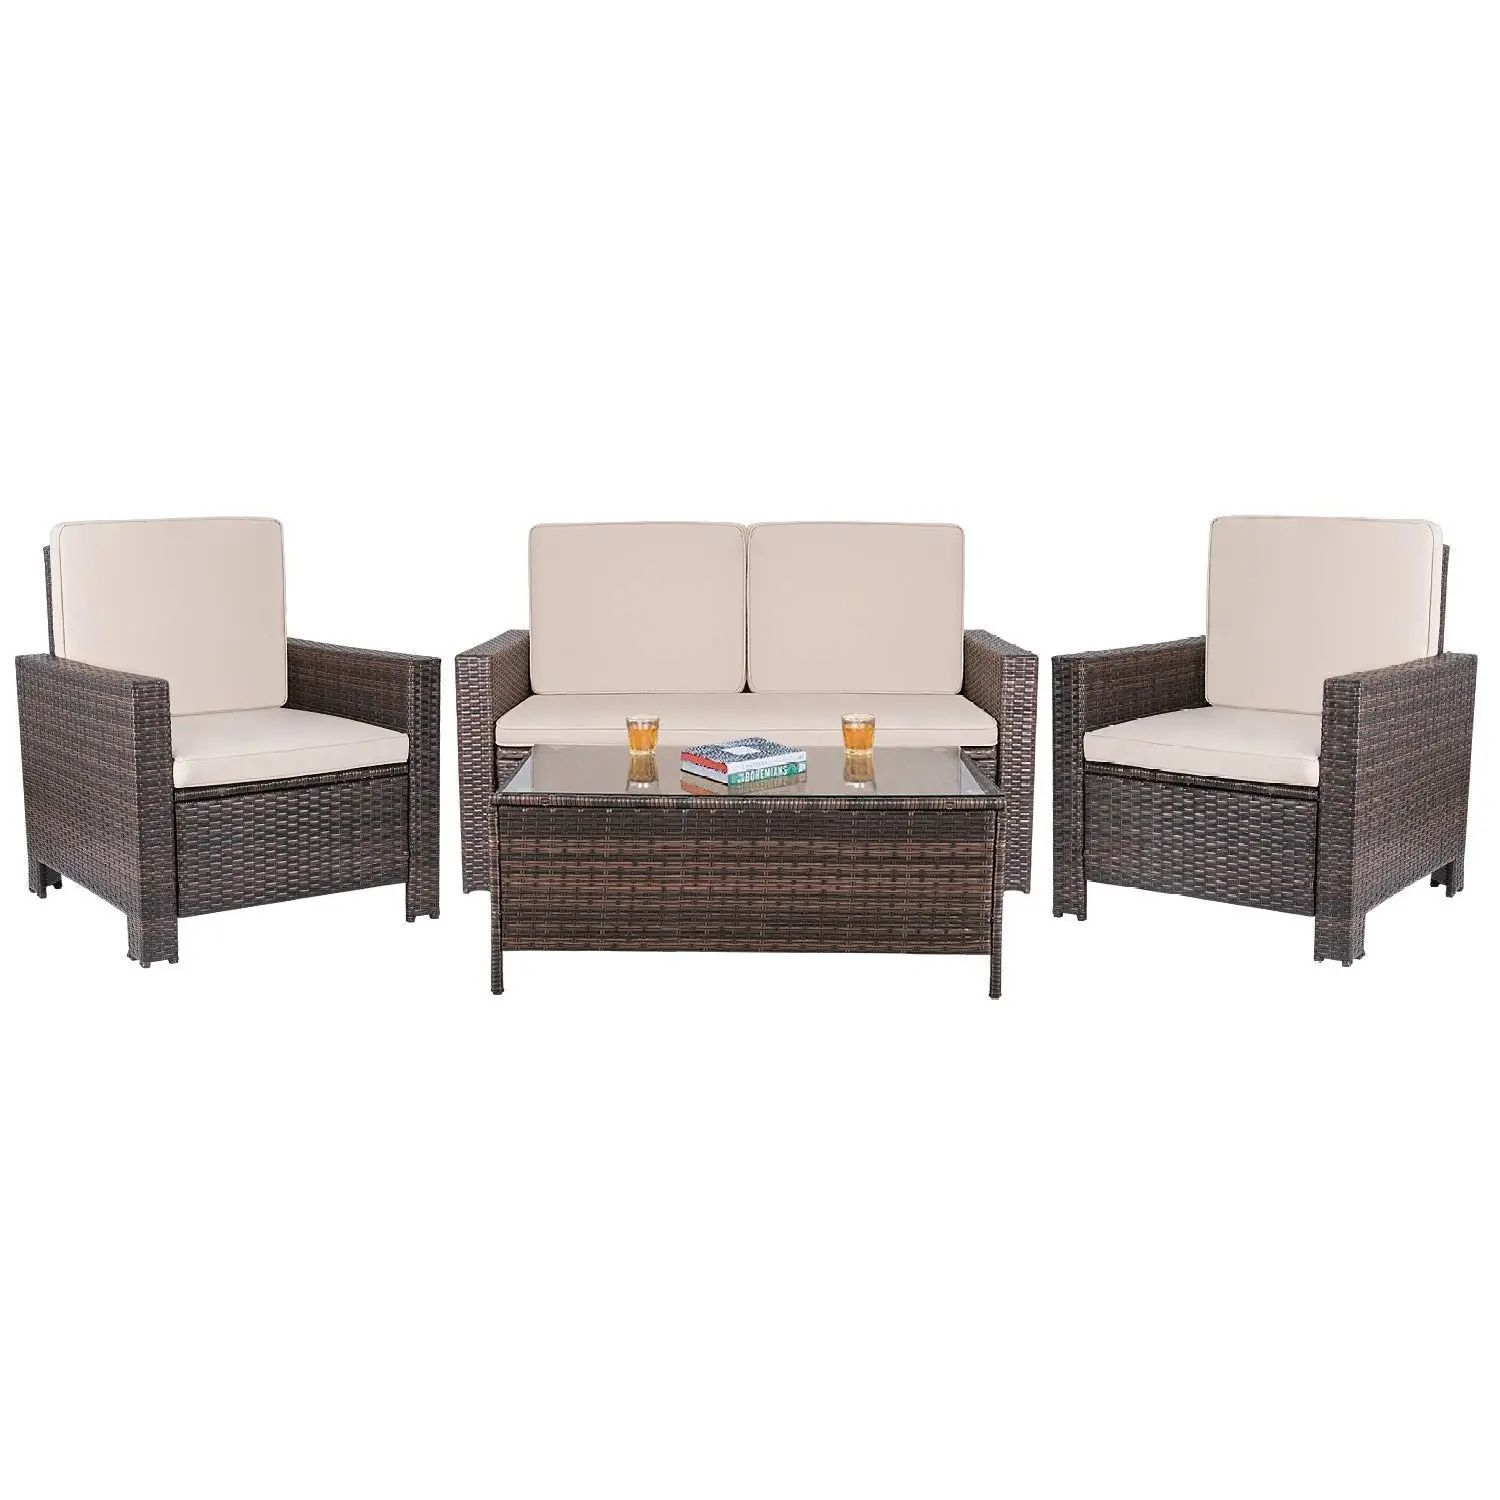 4 Piece Patio Conversation set, outdoor wicker rattan furniture garden sofa chair set with cushion.